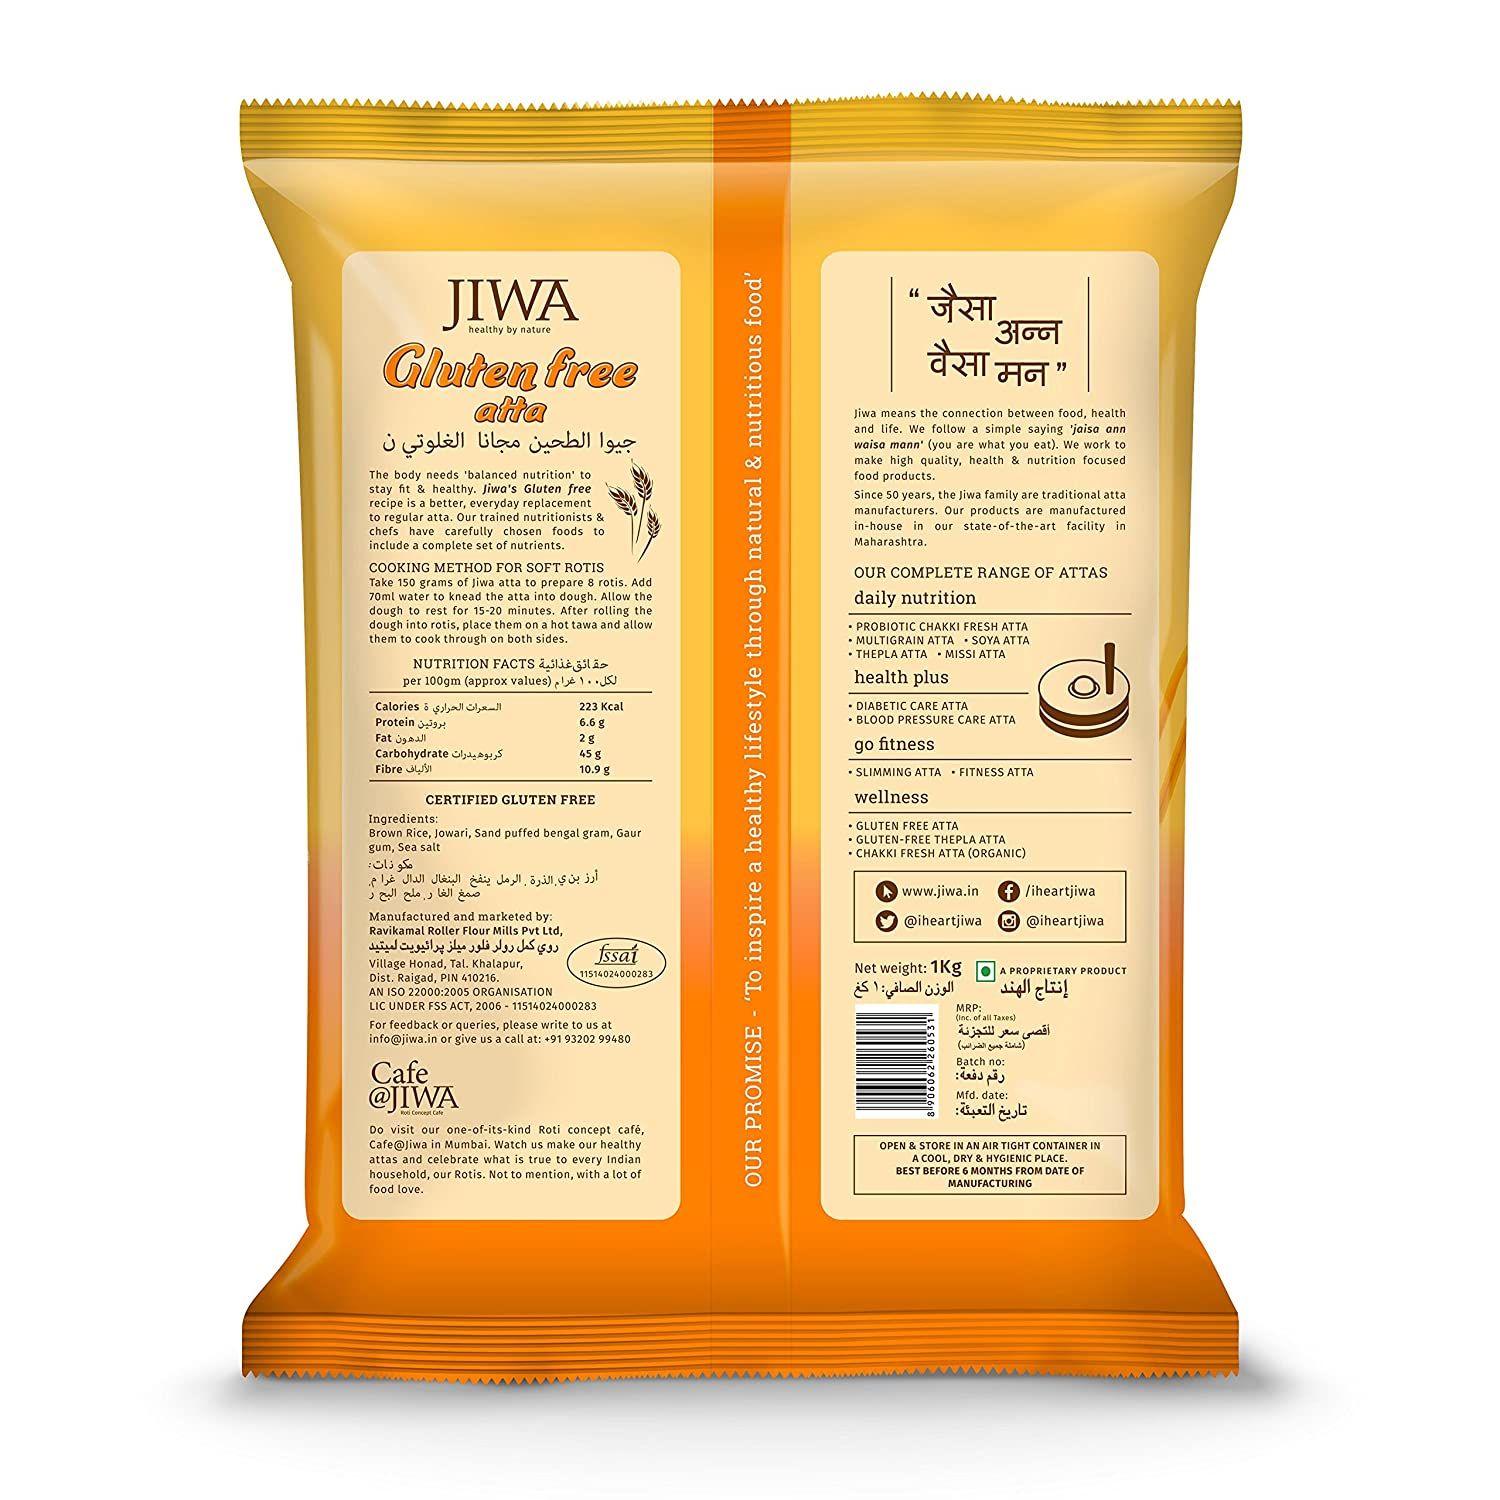 Jiwa Organic Gluten Free Atta Image